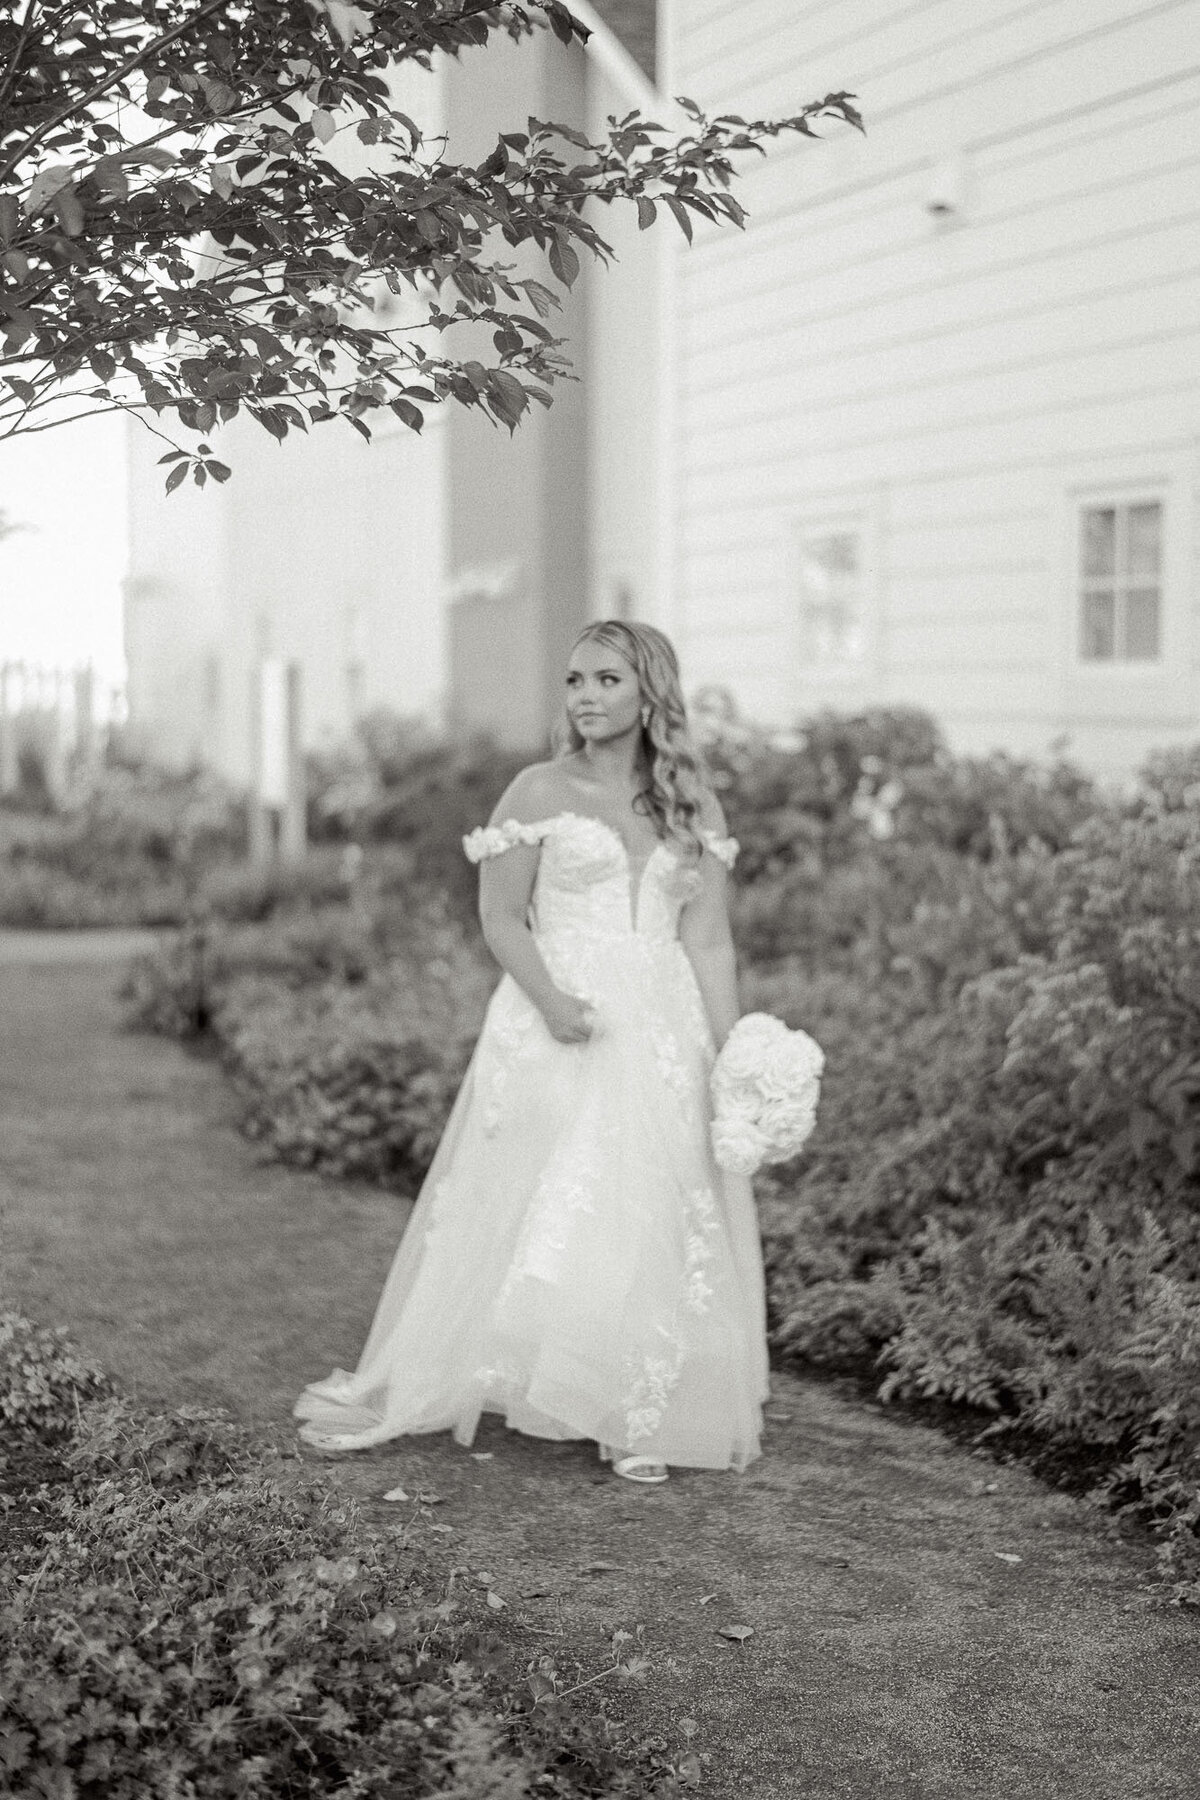 Ali-Reed-Photography-Alexandra-Elise-Photography-Film-Wedding-Photographer-Finger-Lakes-New-York-New-England-007